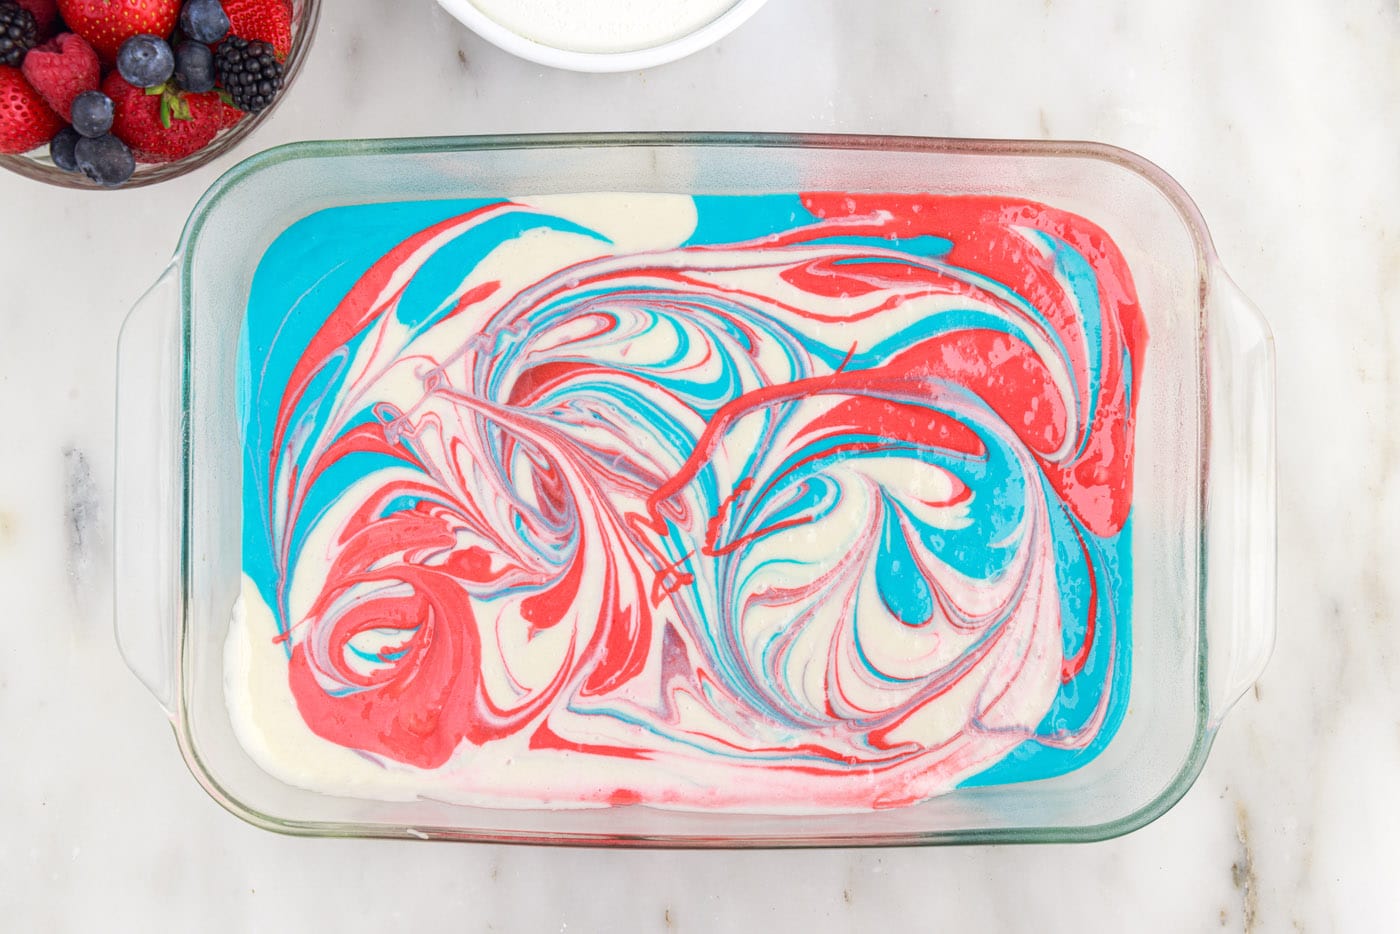 swirled red white and blue cake batter